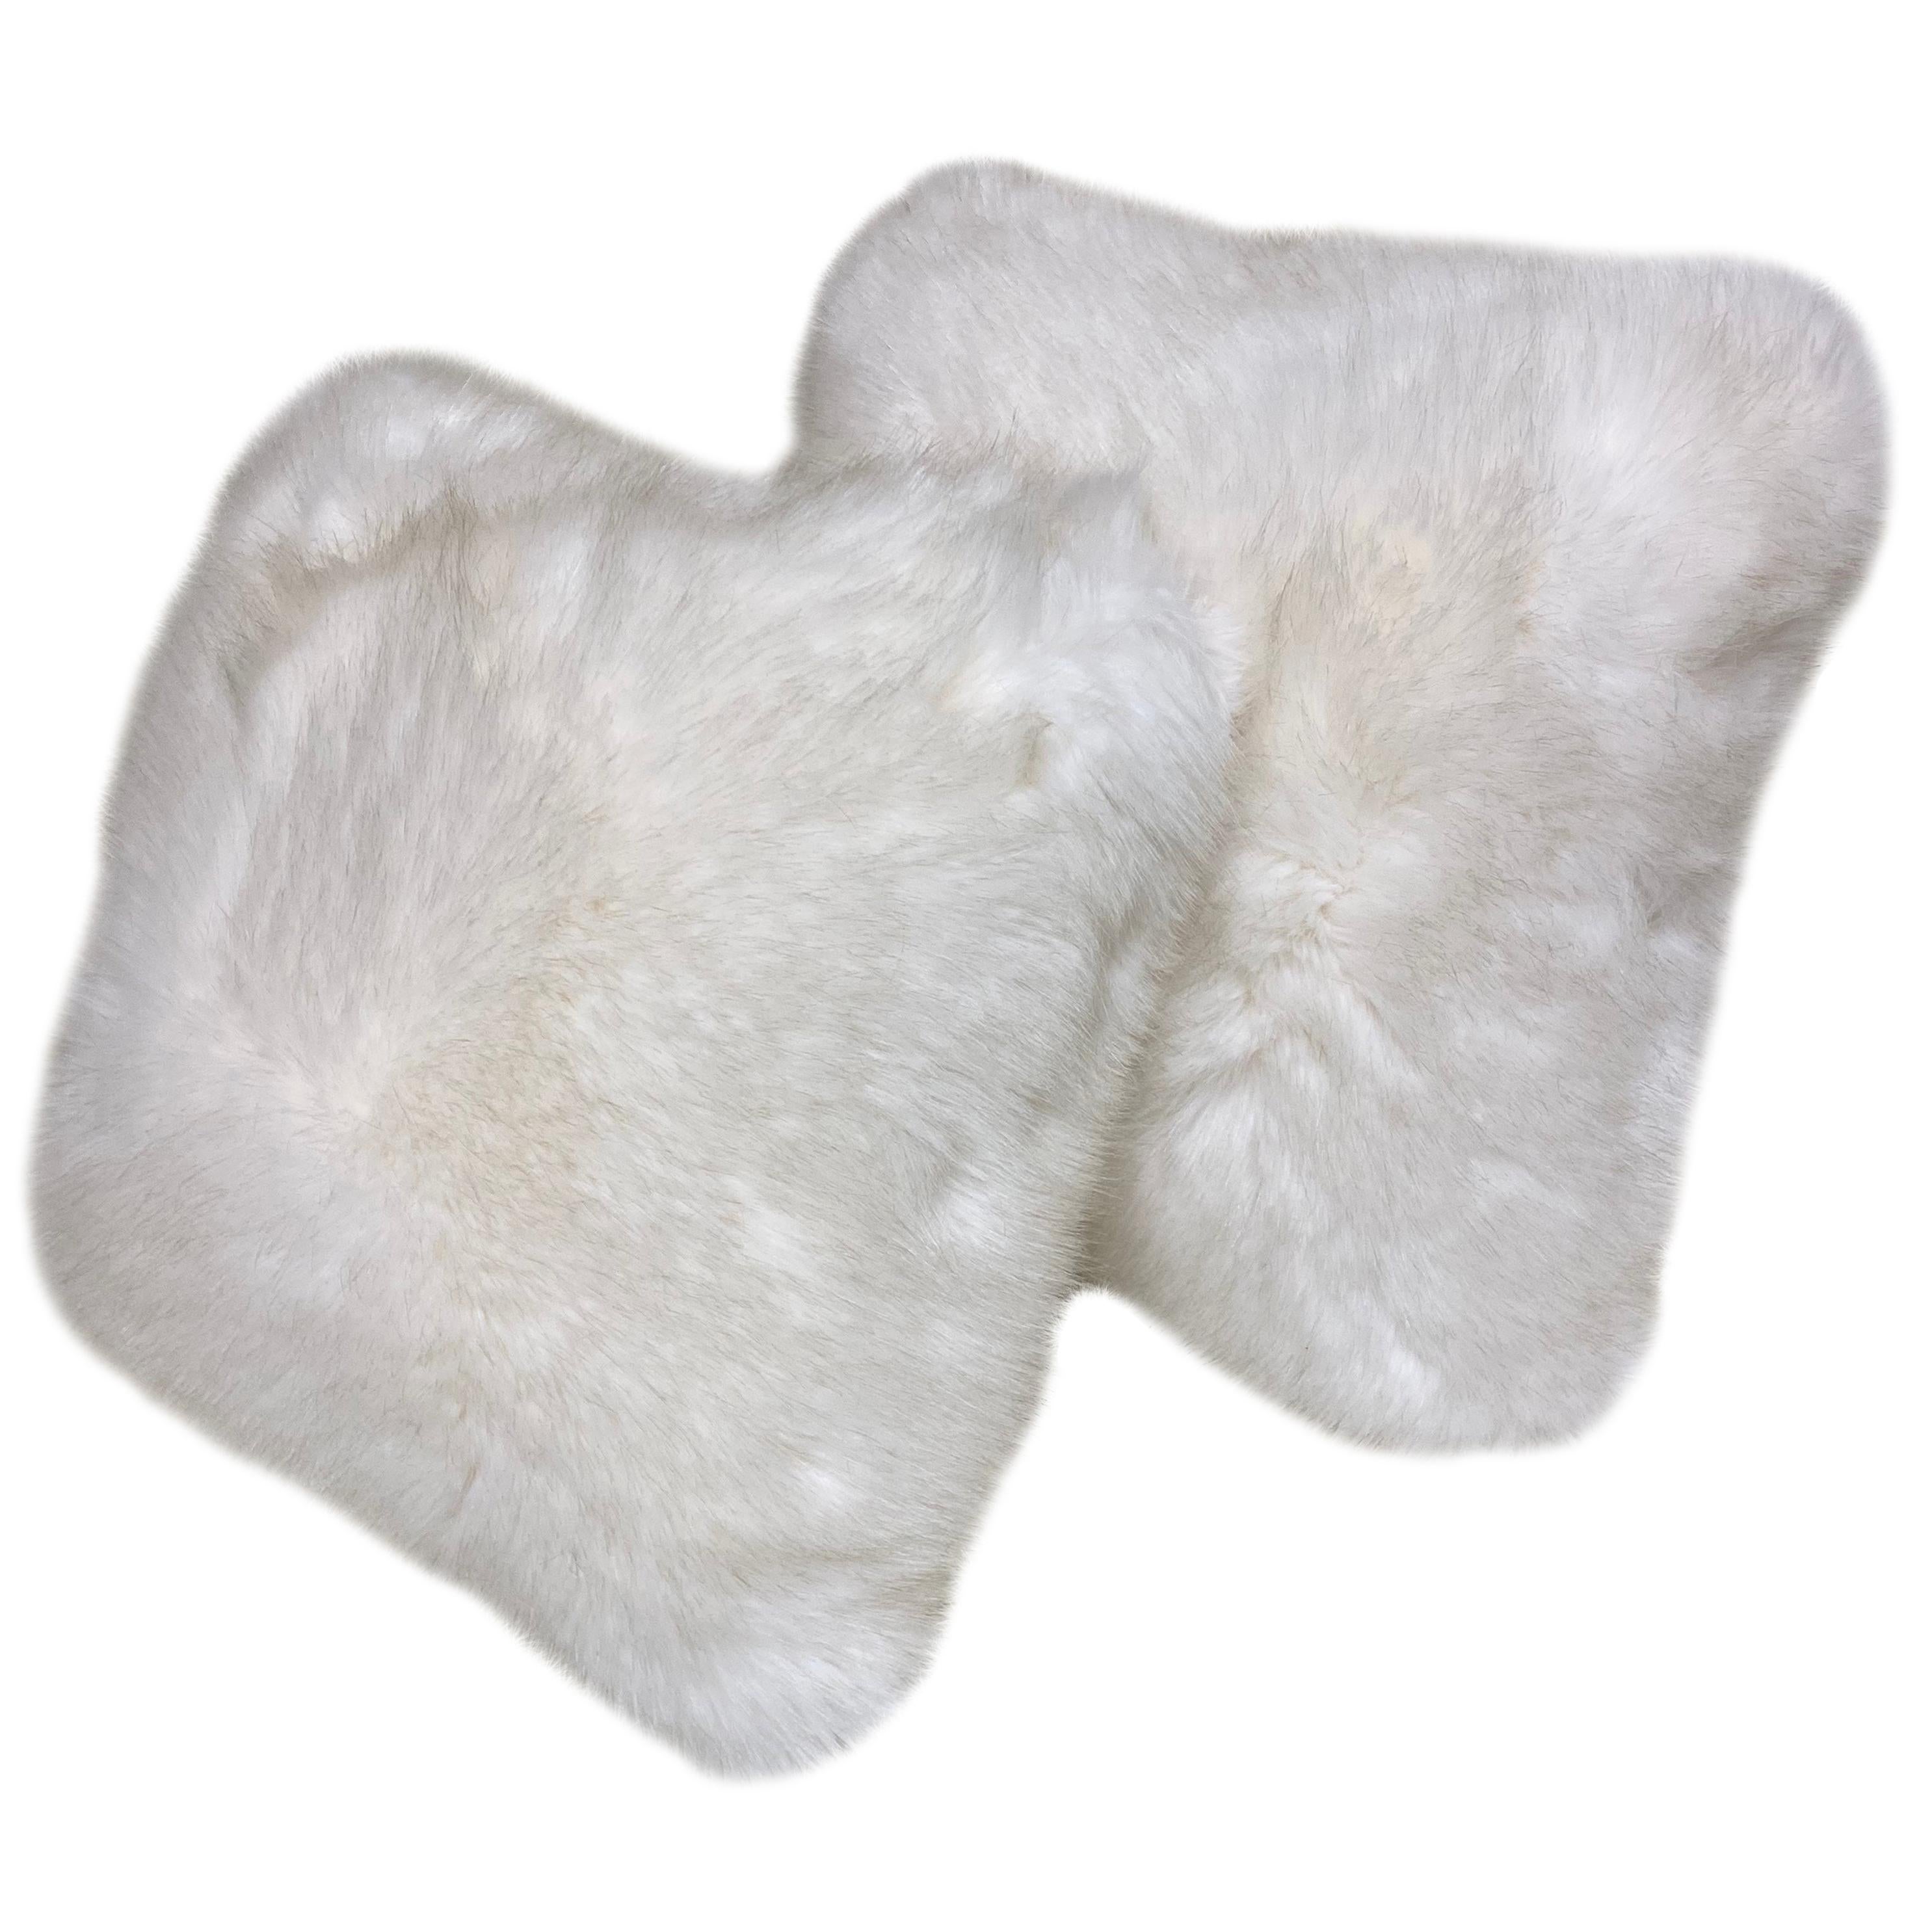 Pair of Simulated "Polar Bear" Fur Cushions